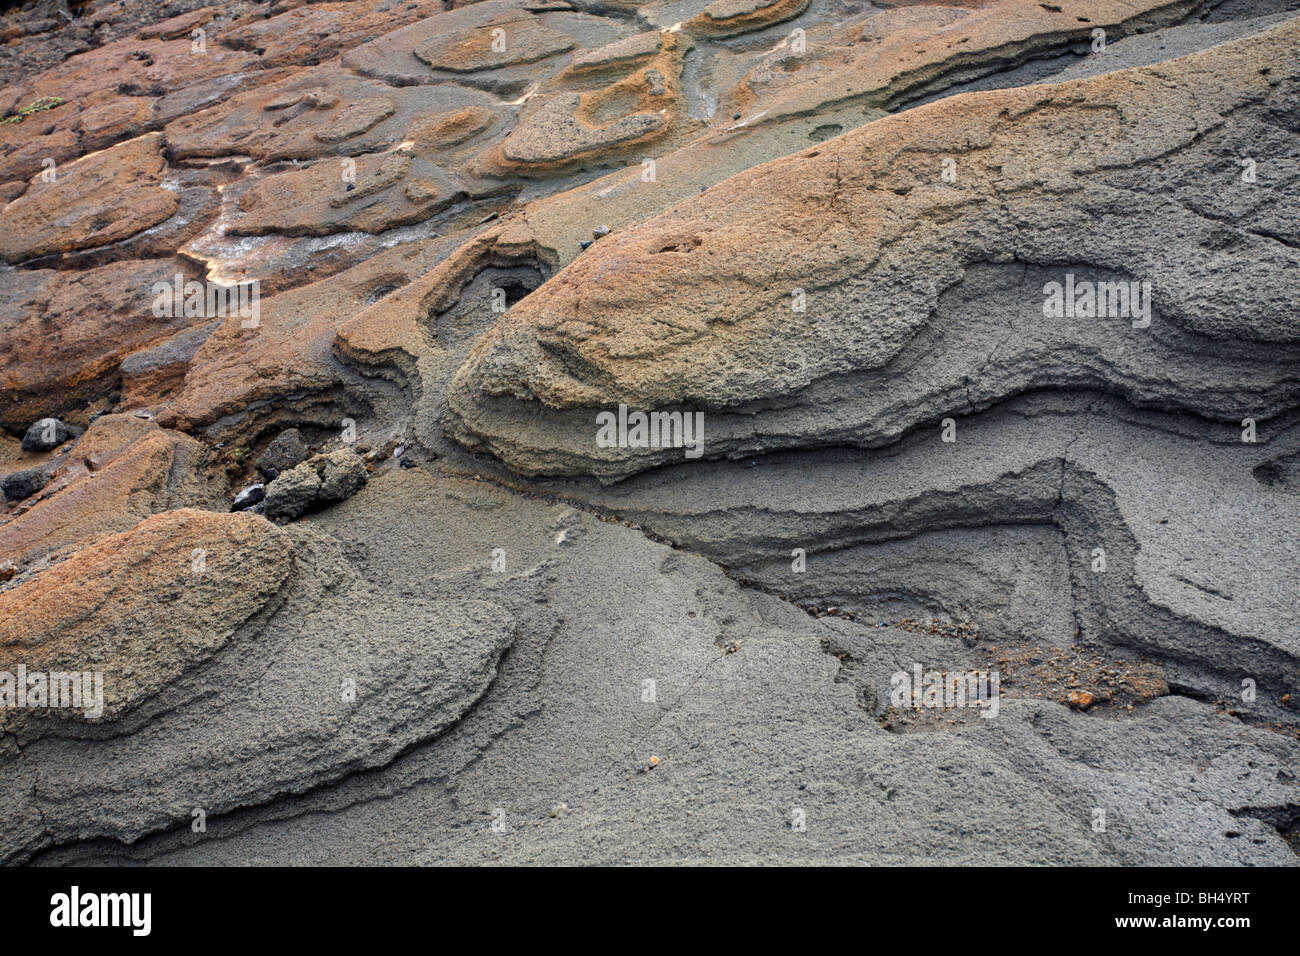 Lava flows abstract, part of the landscape of Isla Bartolome, Bartolome Island. Stock Photo